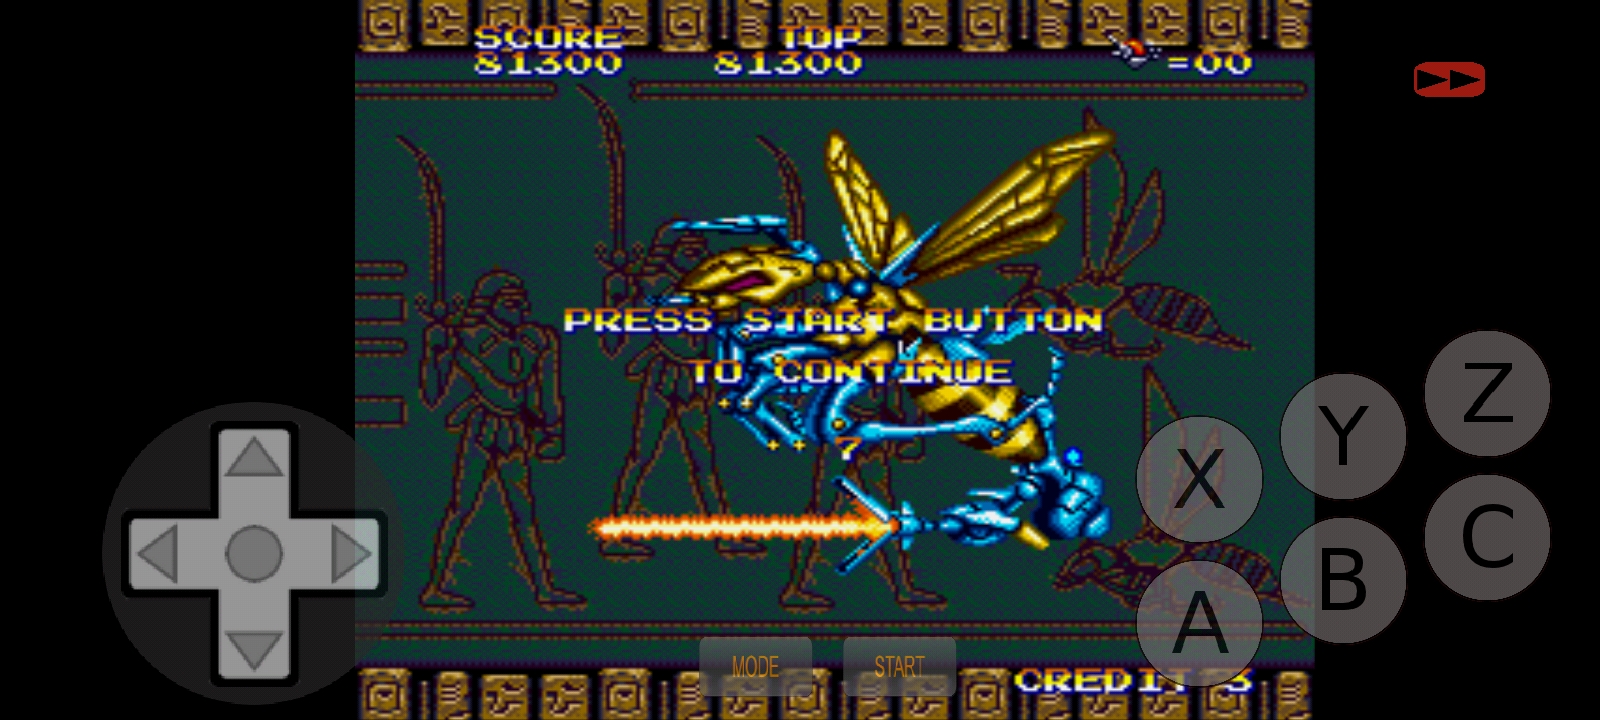 Hauntedprogram: Insector X [Normal] (Sega Genesis / MegaDrive Emulated) 81,300 points on 2022-11-09 06:45:21